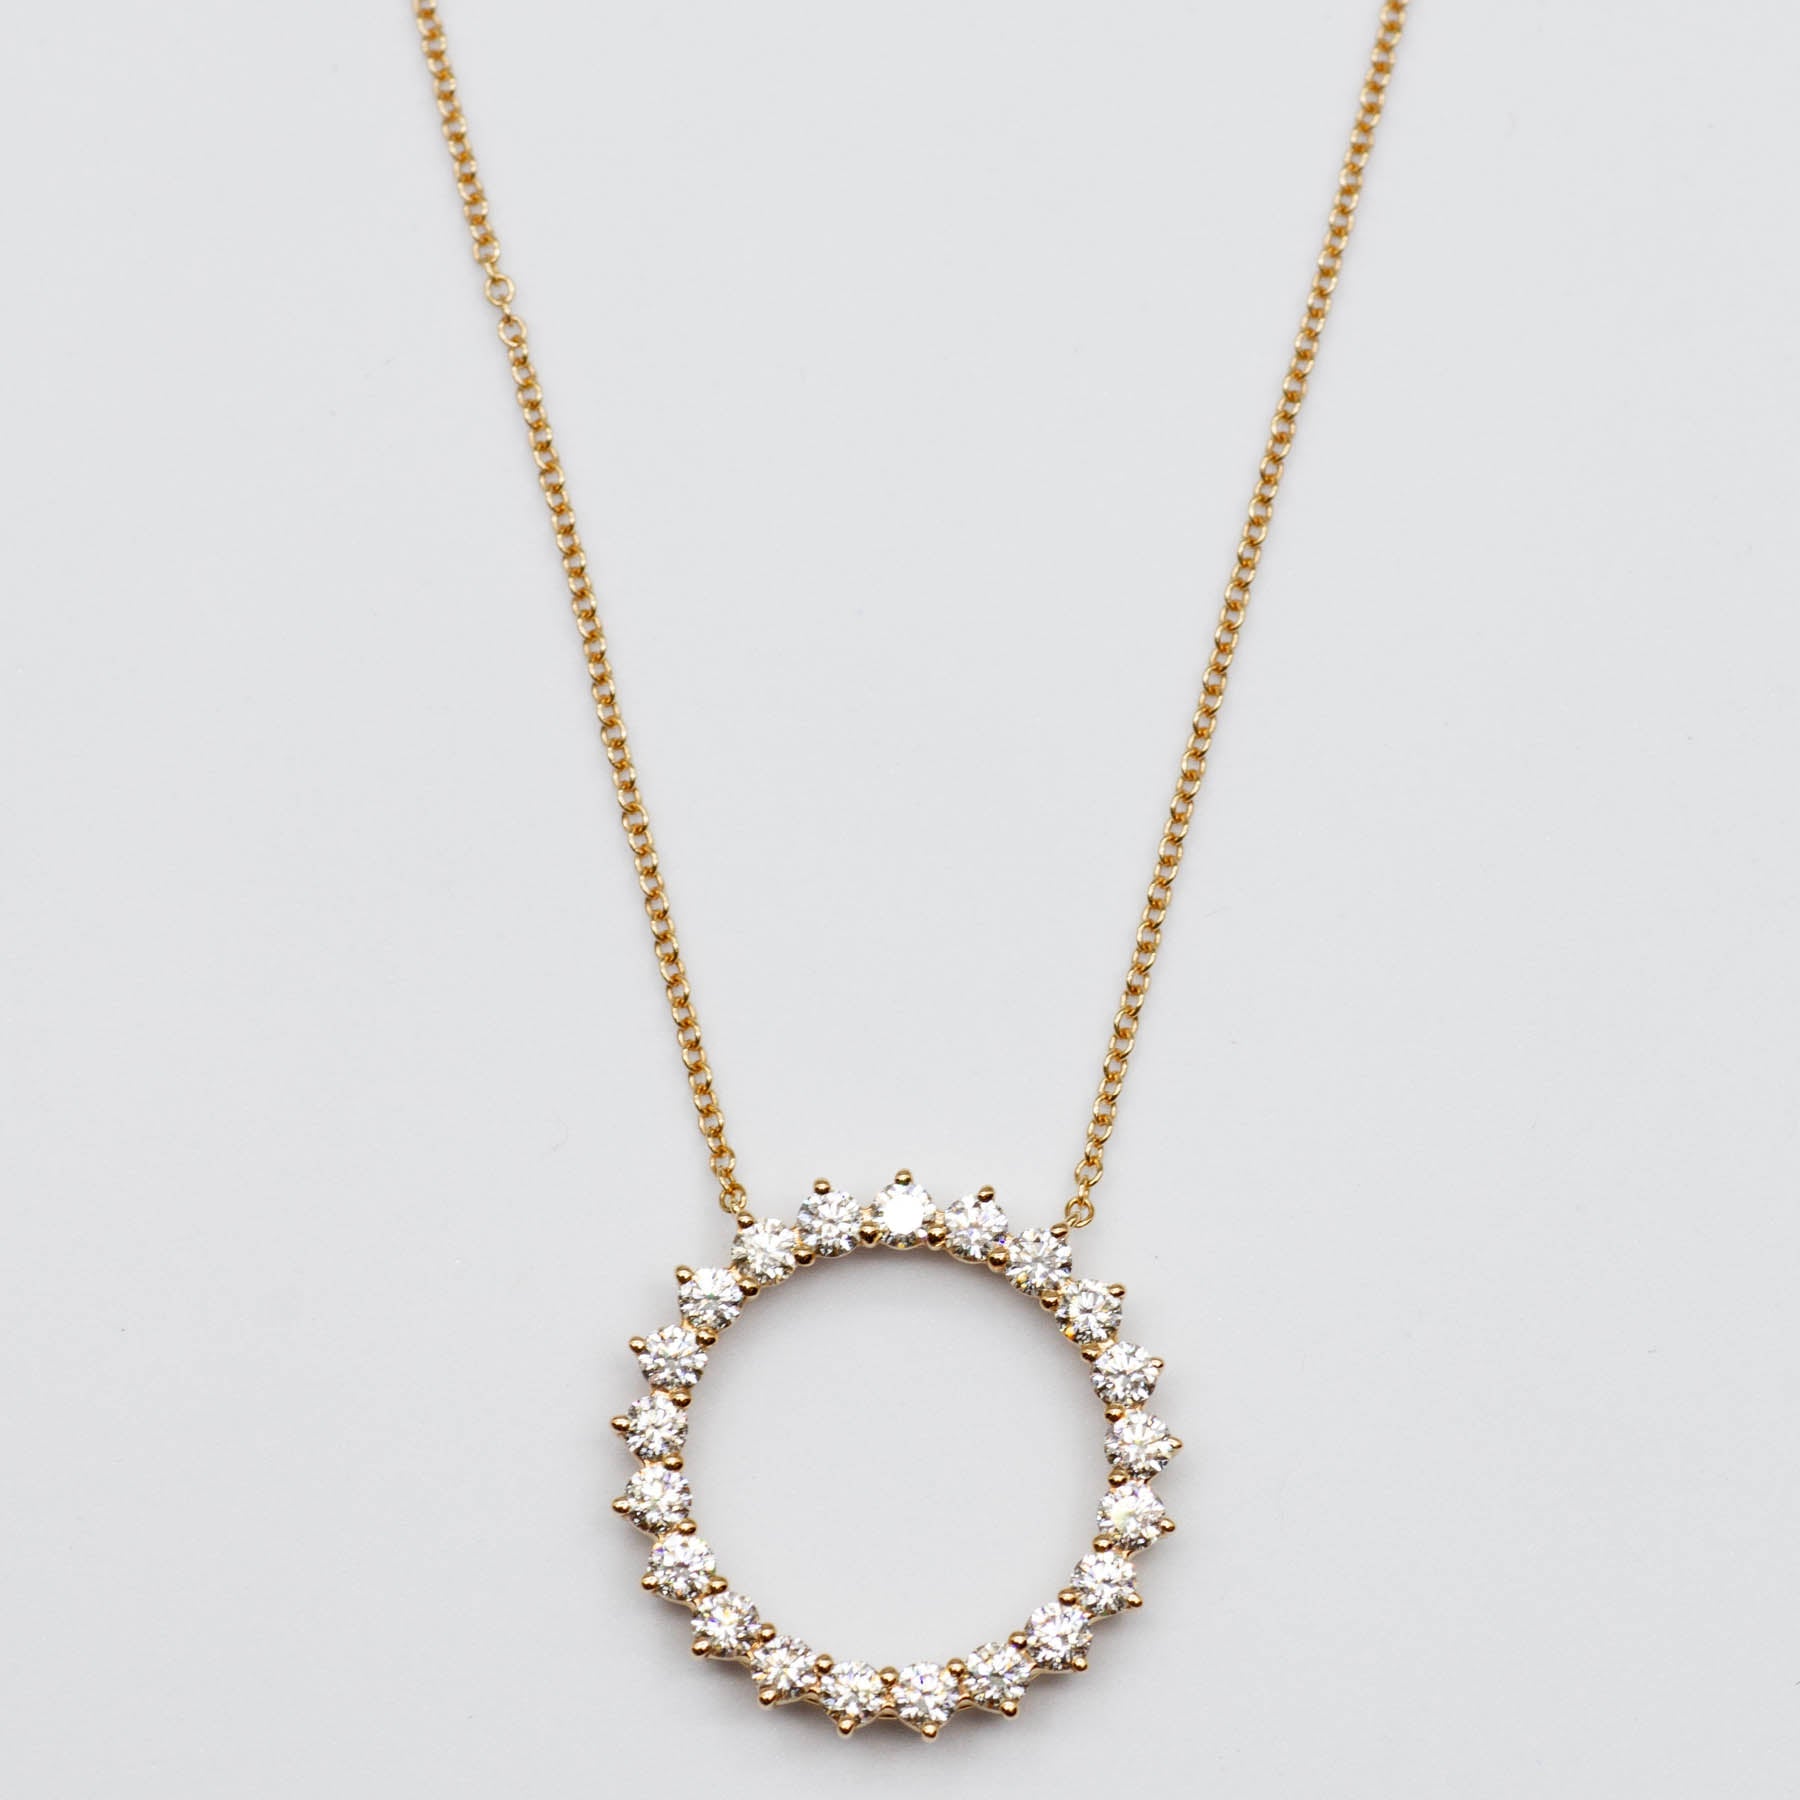 'Tiffany & Co.' 18k Rose Gold Open Circle Diamond Necklace | 0.93ctw | - 100 Ways